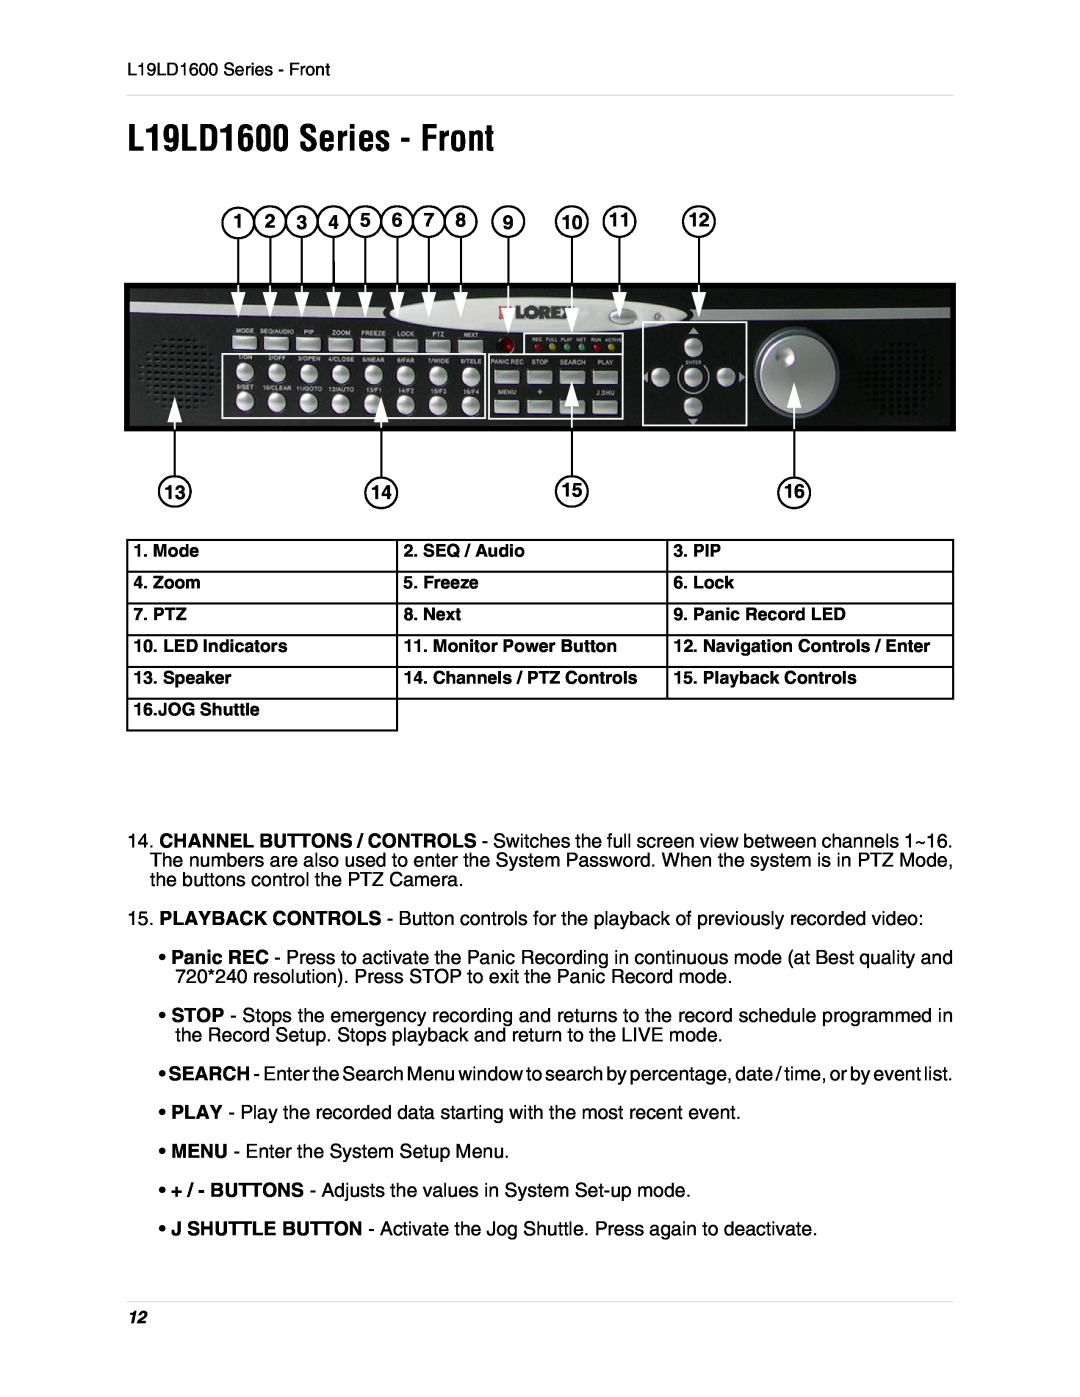 LOREX Technology L19lD1616501 instruction manual L19LD1600 Series - Front, MENU - Enter the System Setup Menu 